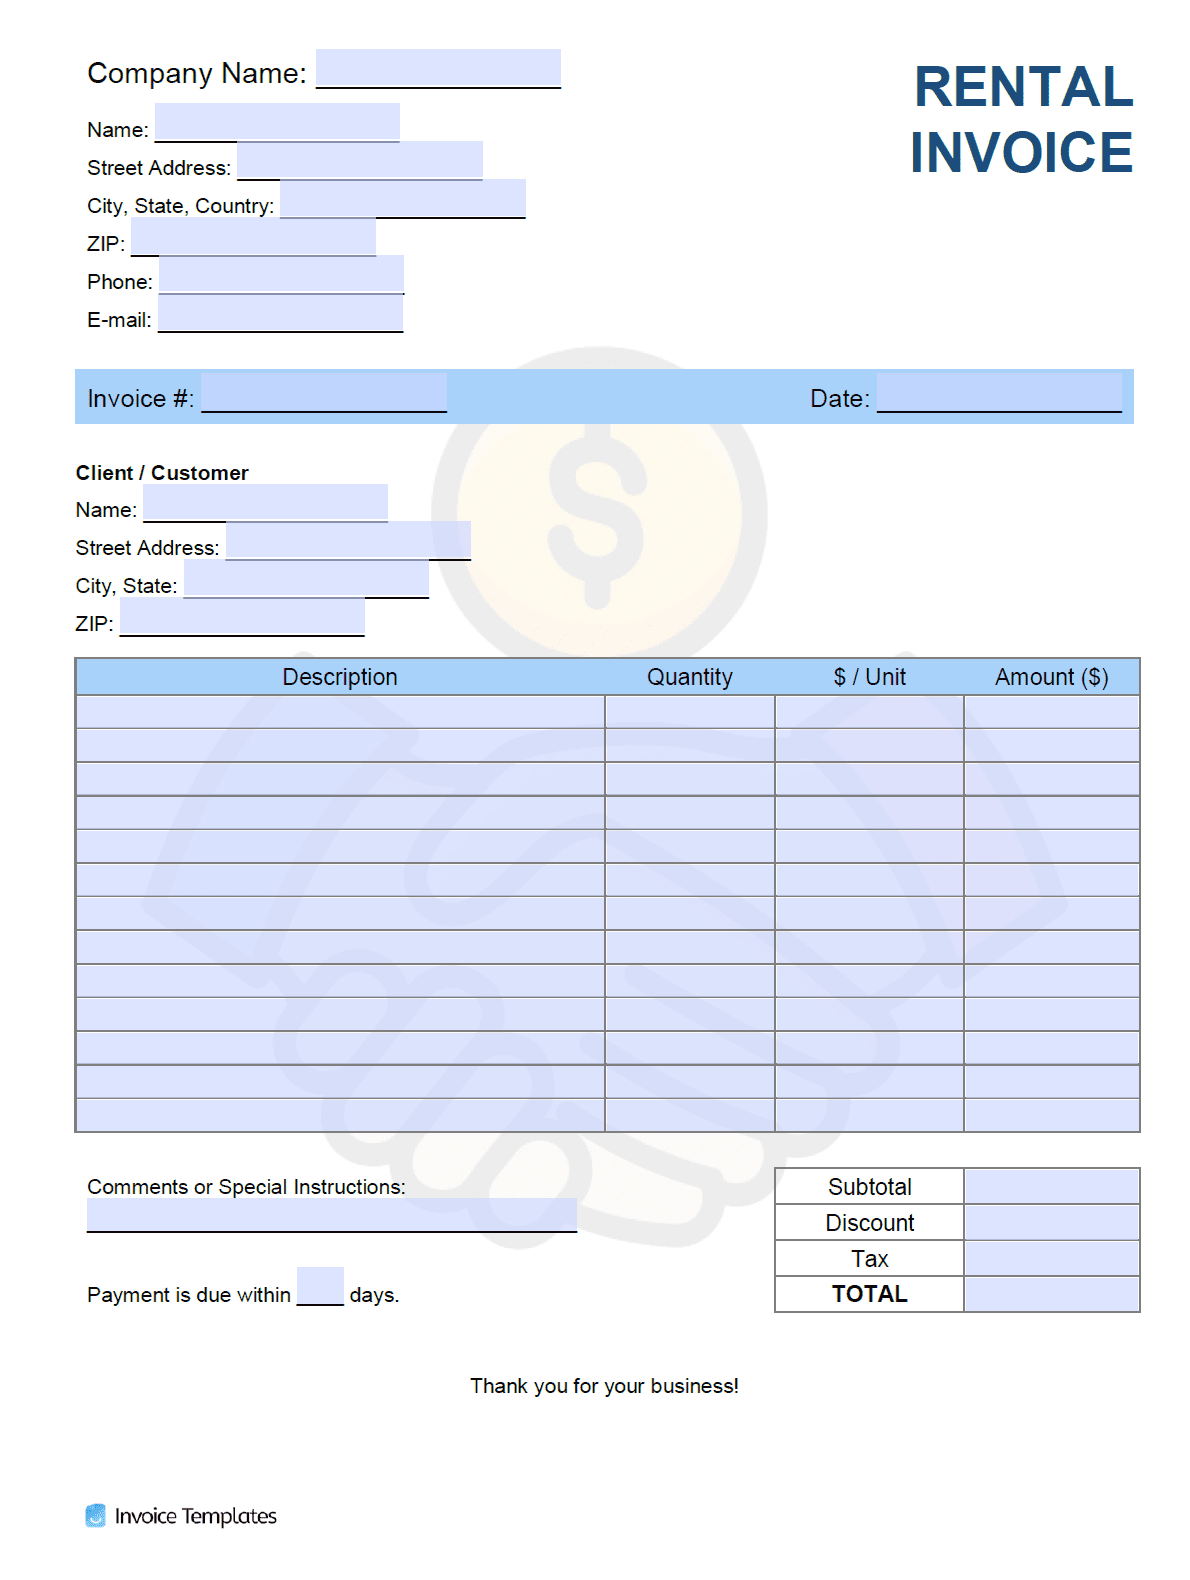 Rental Invoice Template PDF WORD EXCEL